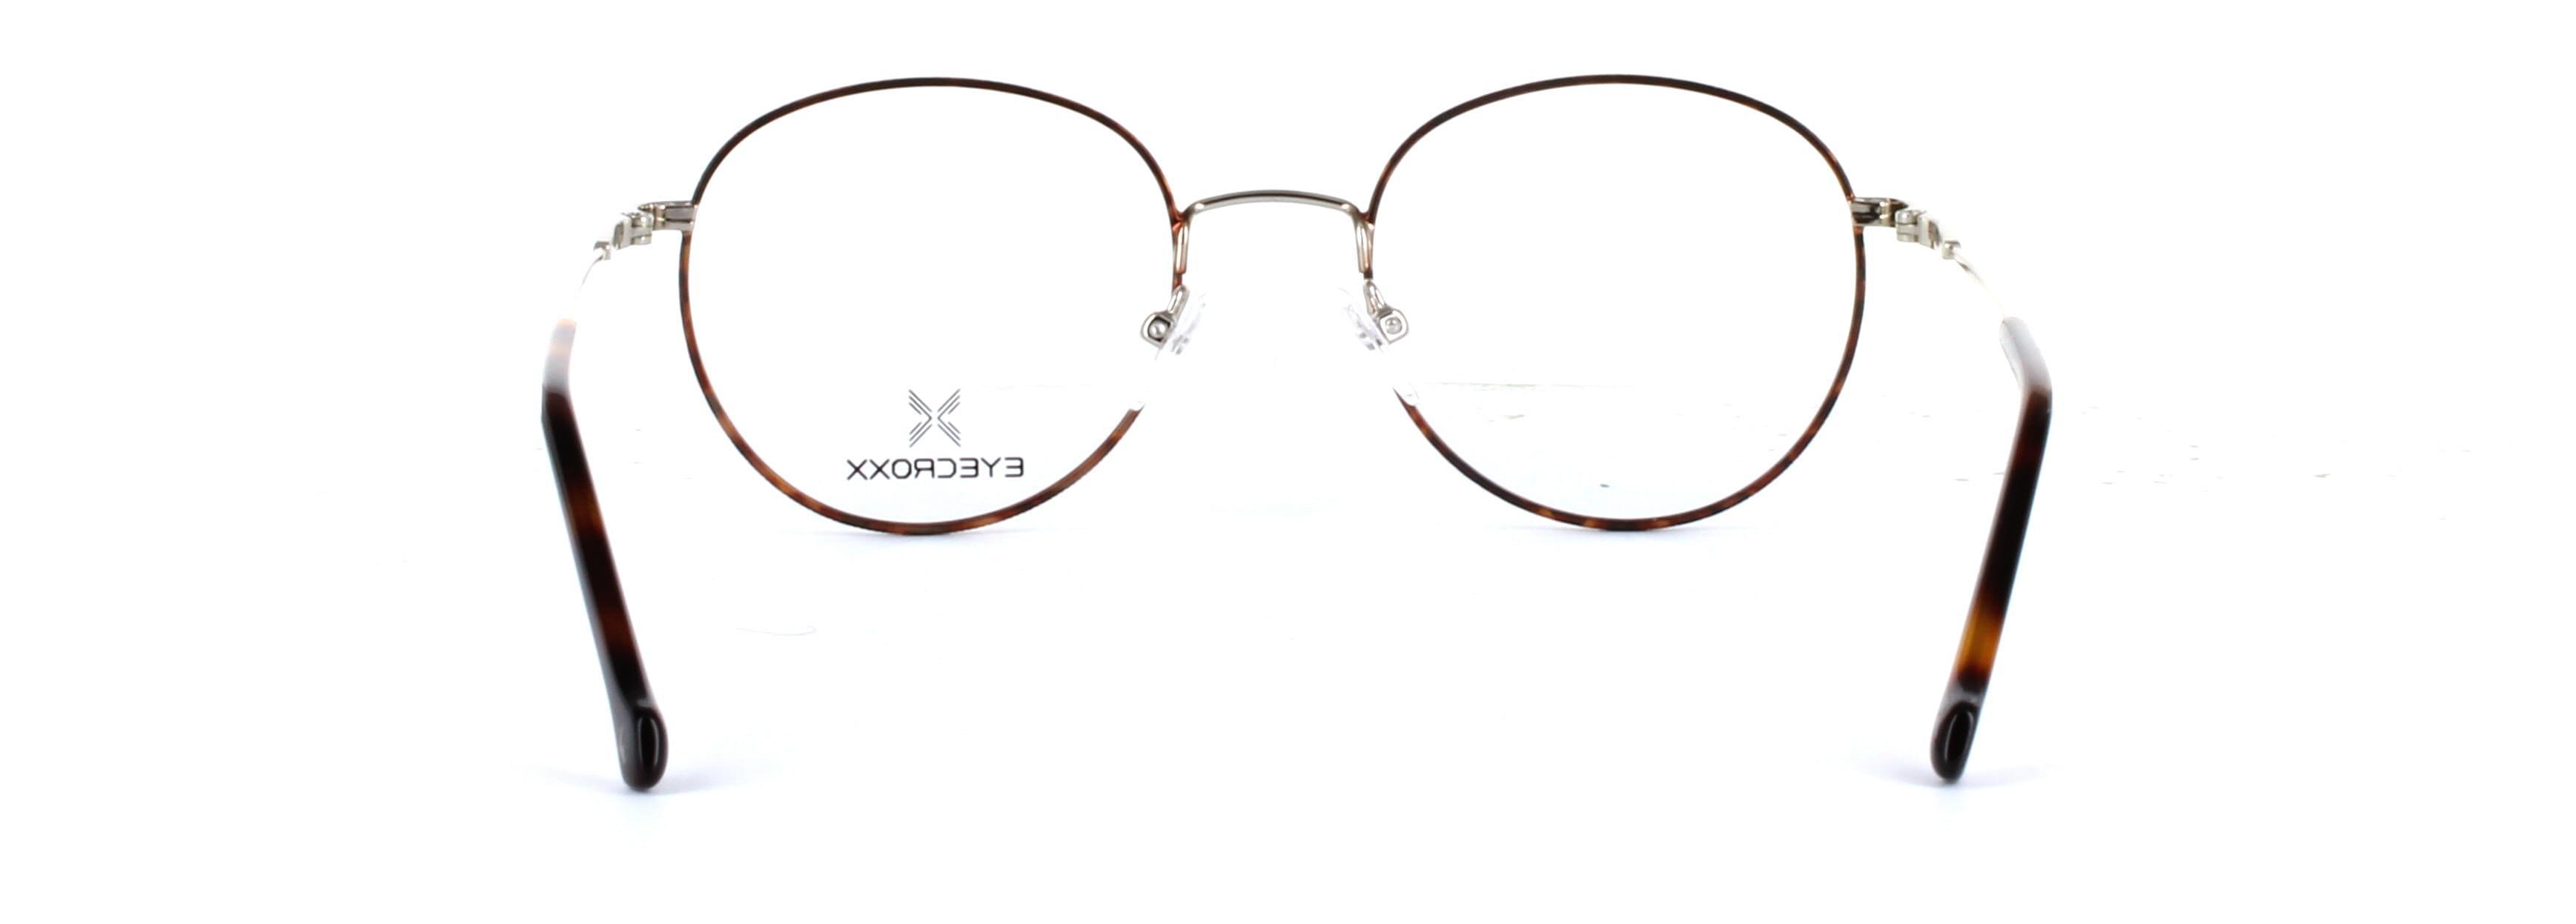 Eyecroxx 570 Tortoise Full Rim Round Metal Glasses - Image View 3